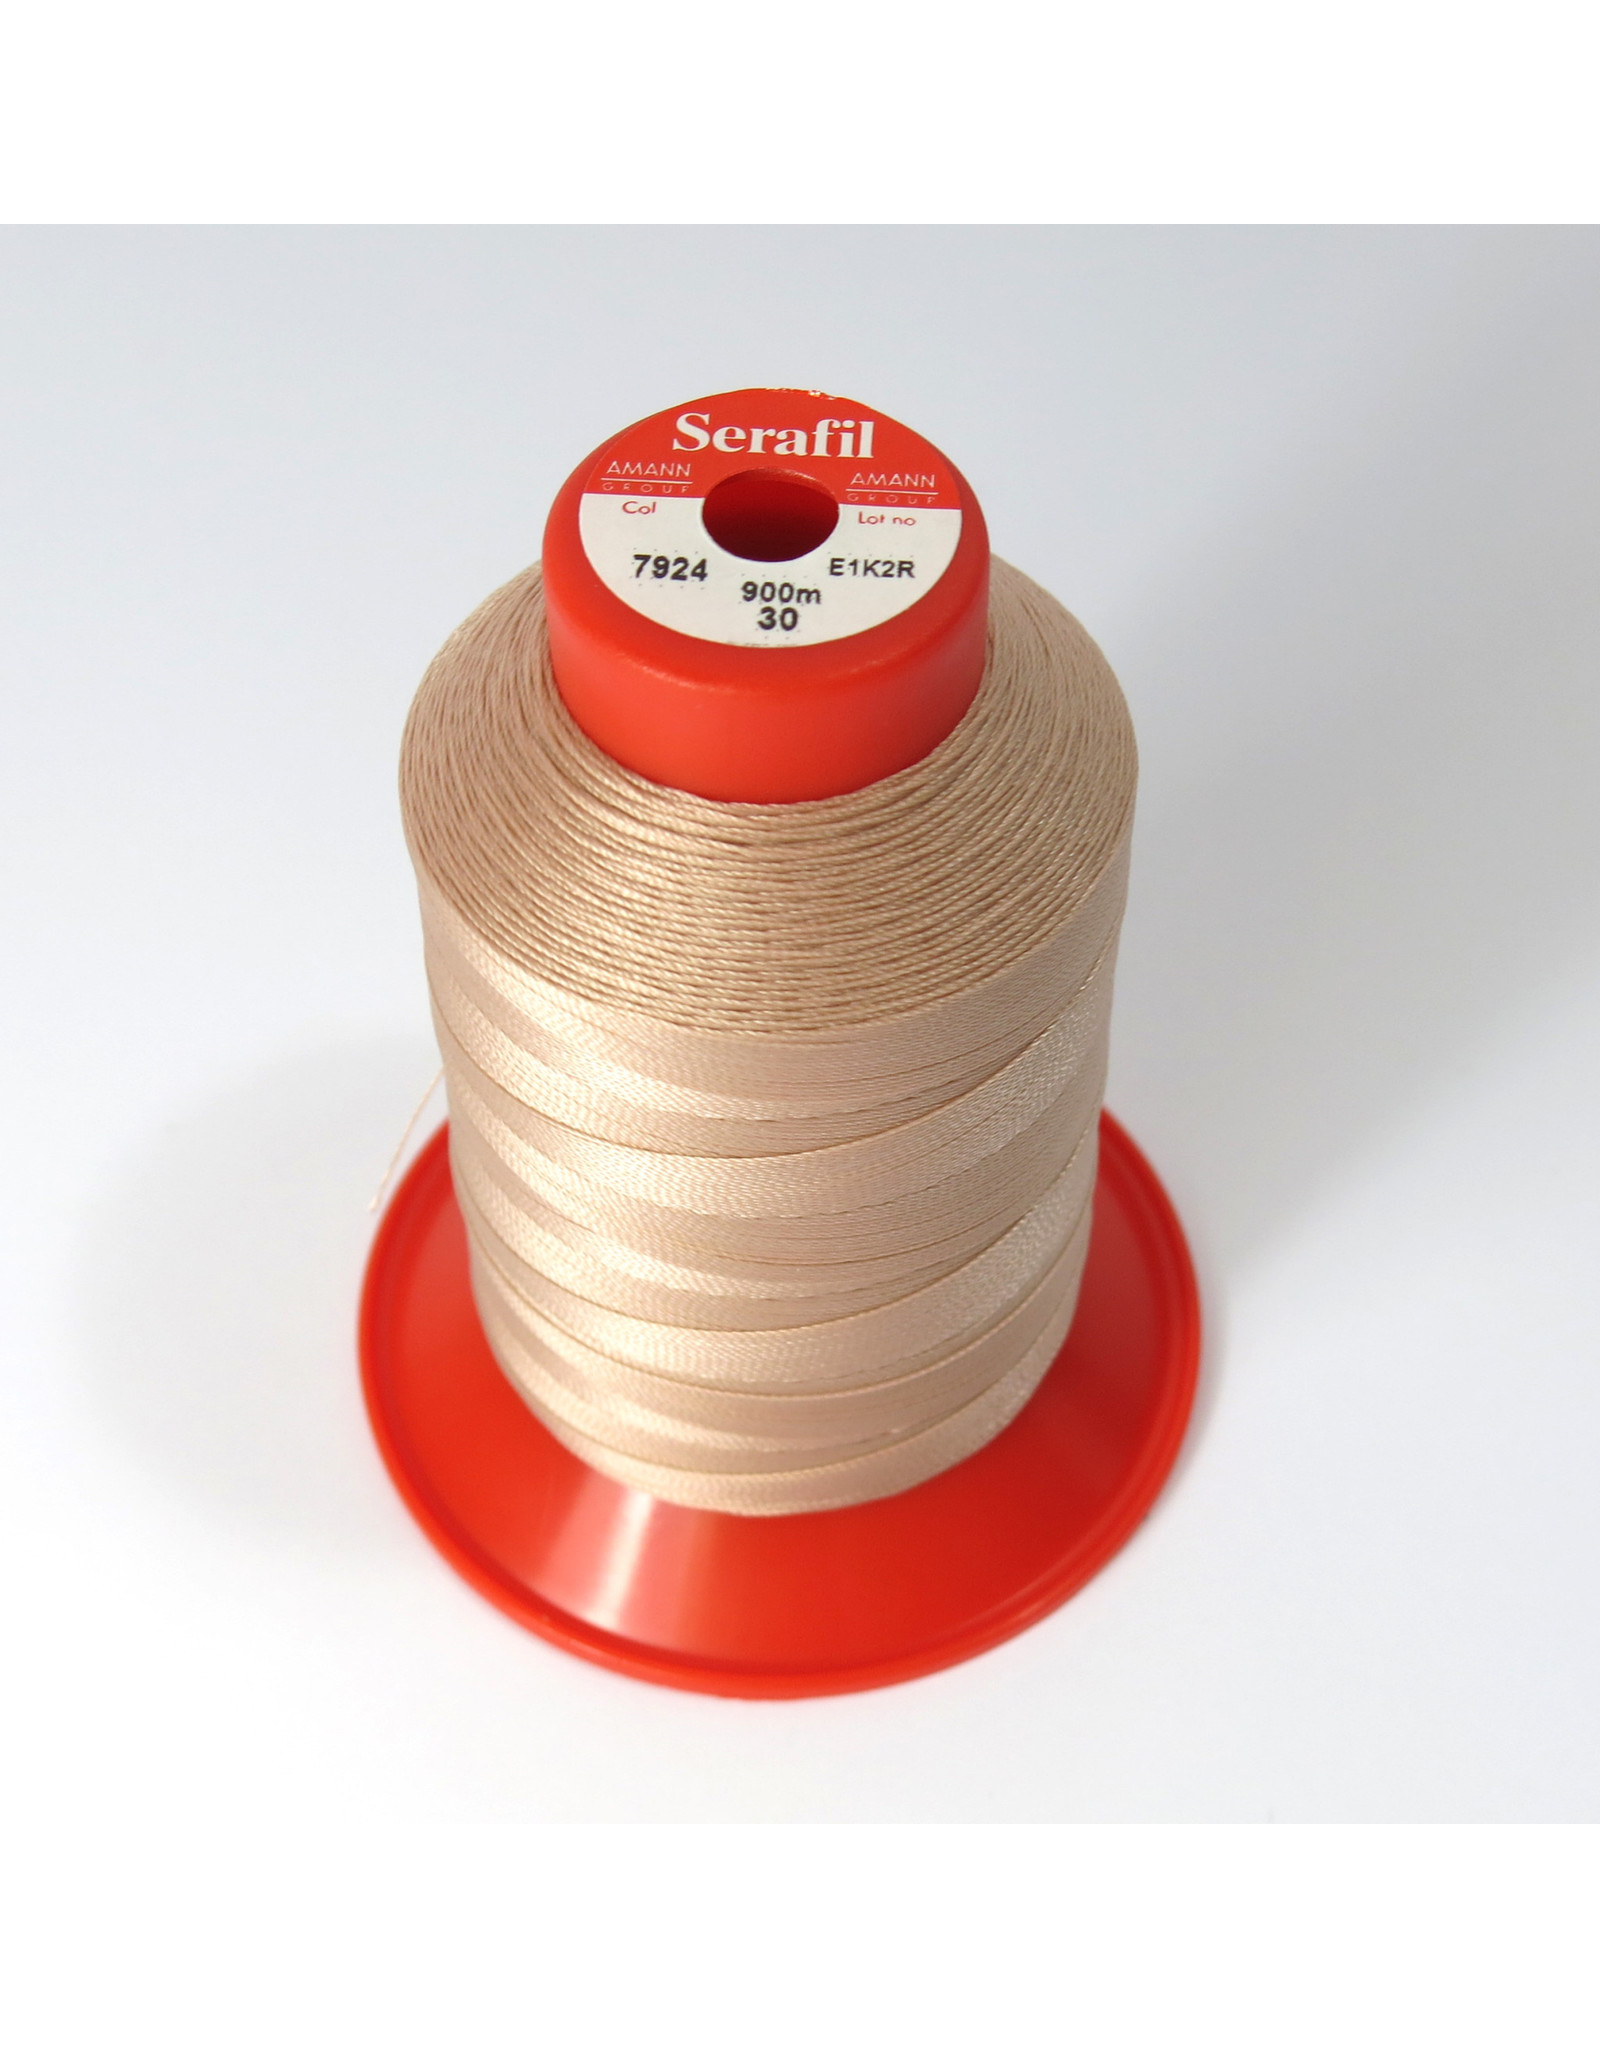 Serafil machine sewing threads 7924